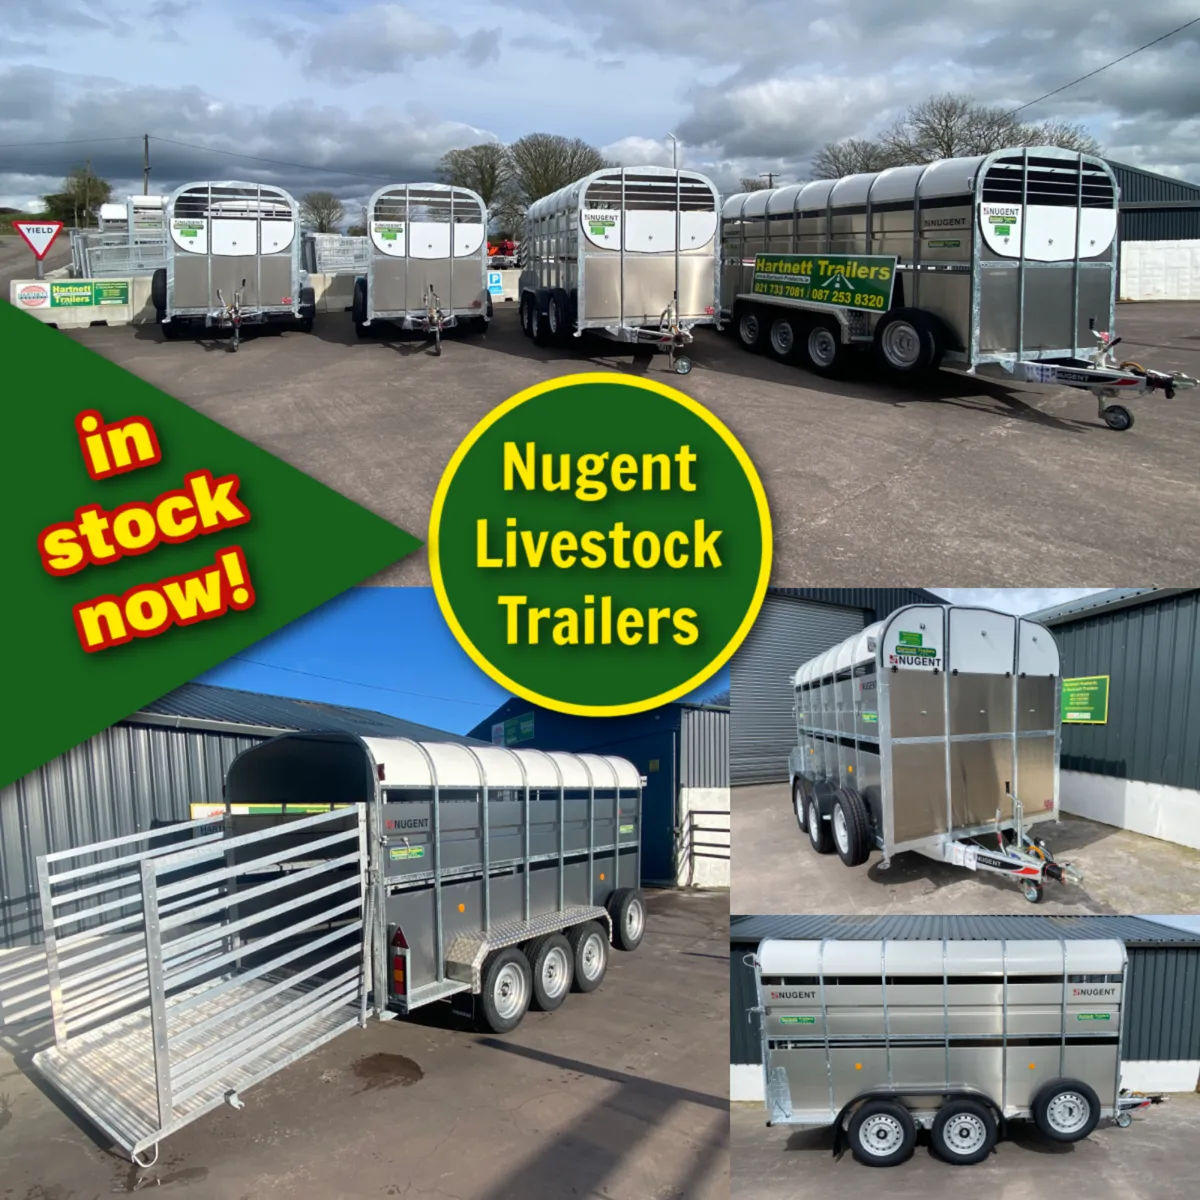 NEW Nugent Livestock Trailers